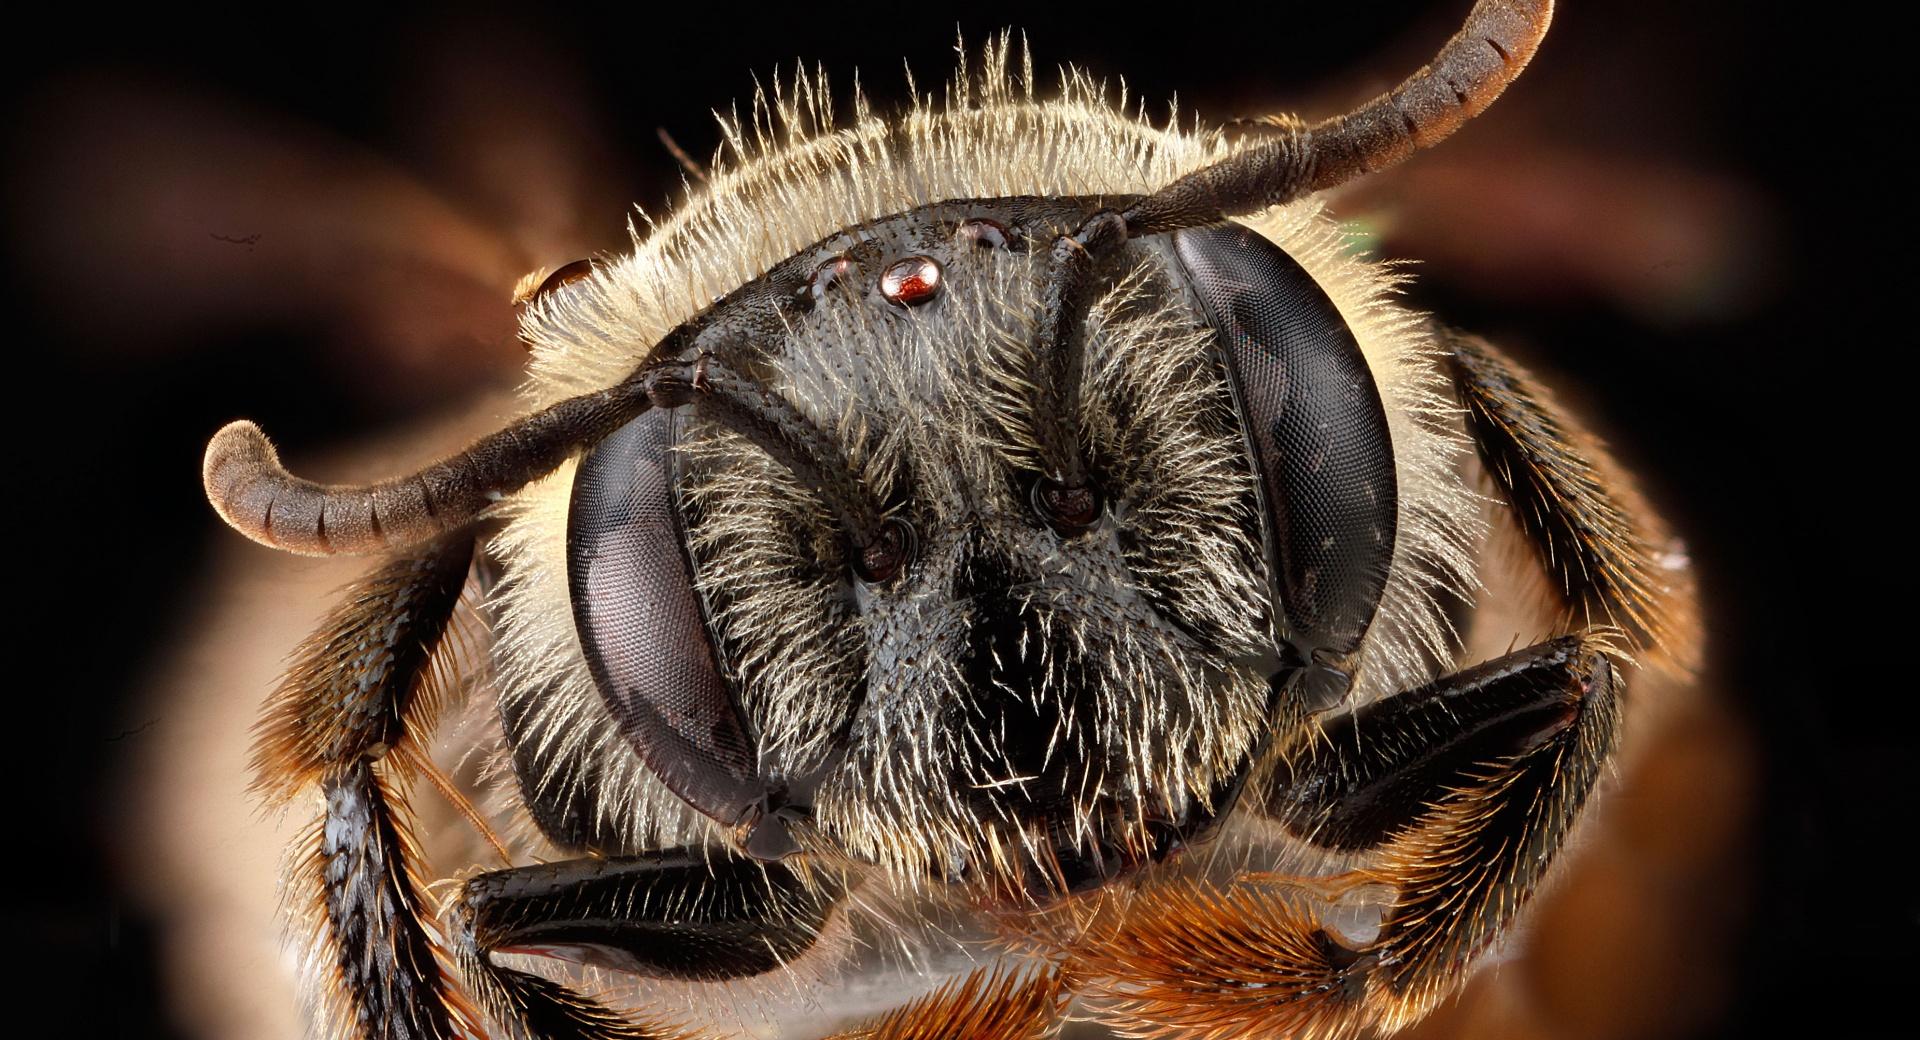 Andrena Fragilis Bee Head Macro at 1024 x 1024 iPad size wallpapers HD quality